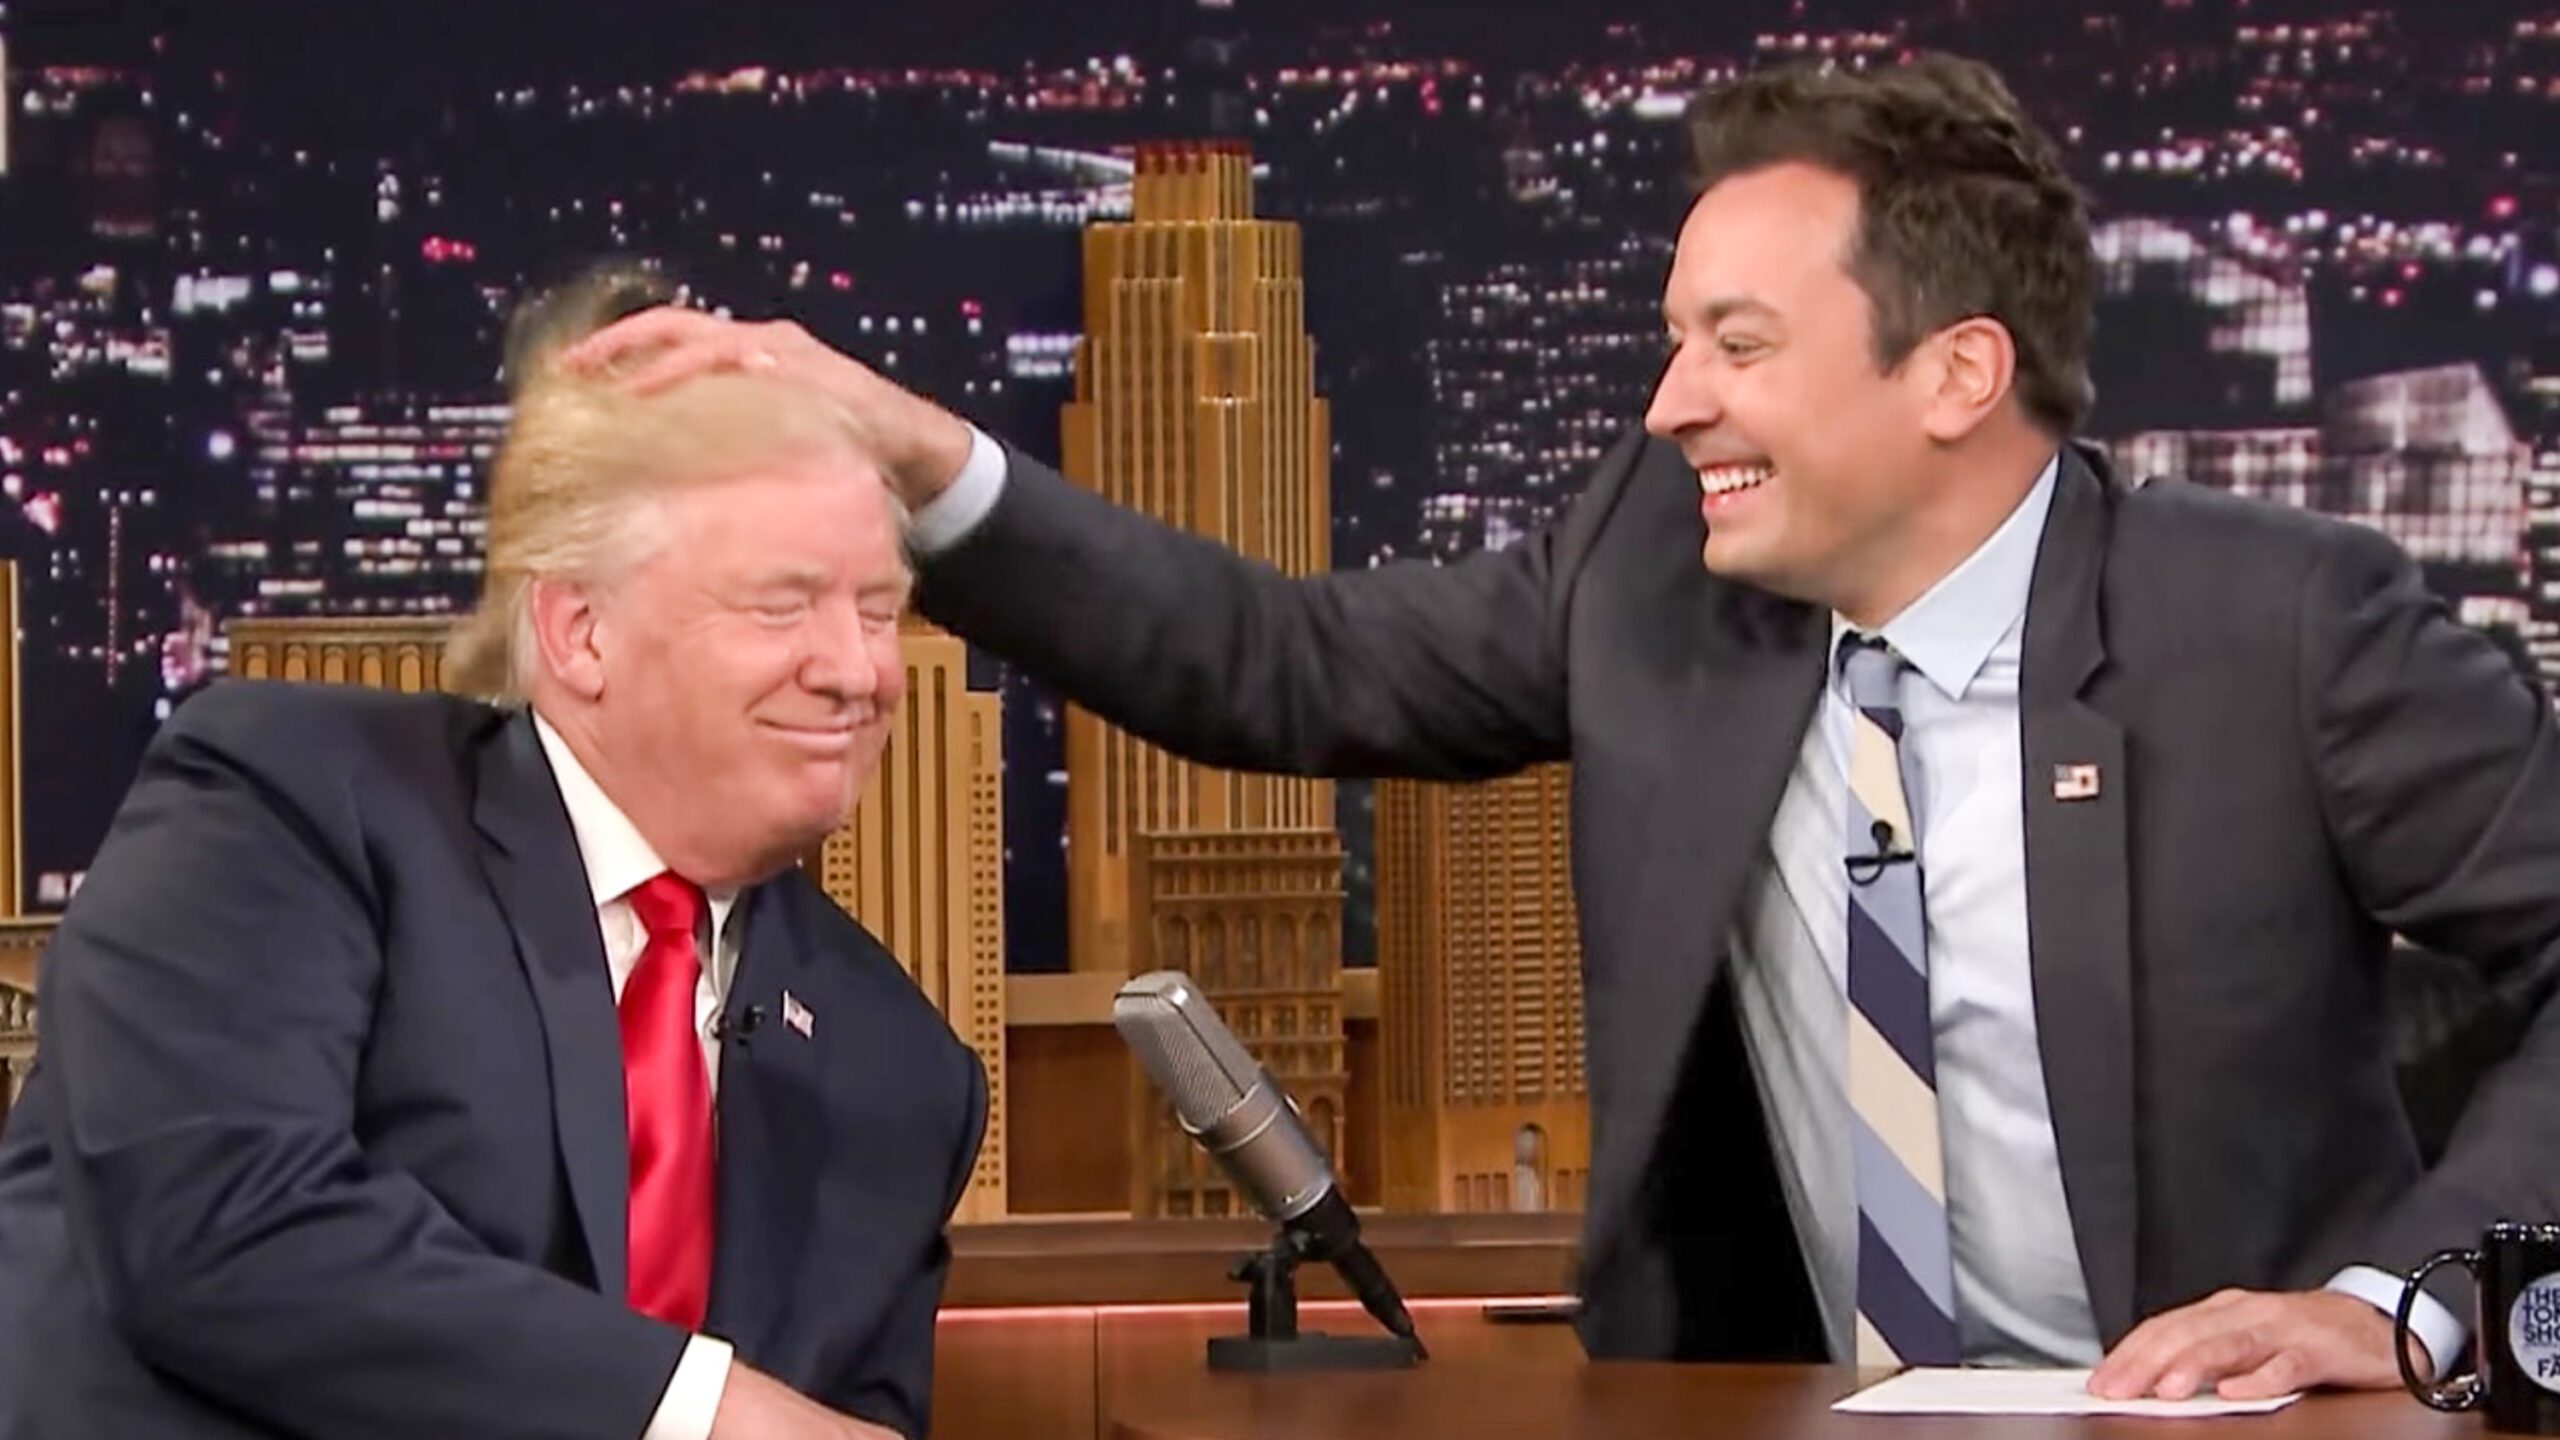 WATCH: Jimmy Fallon messes up Donald Trump’s hair